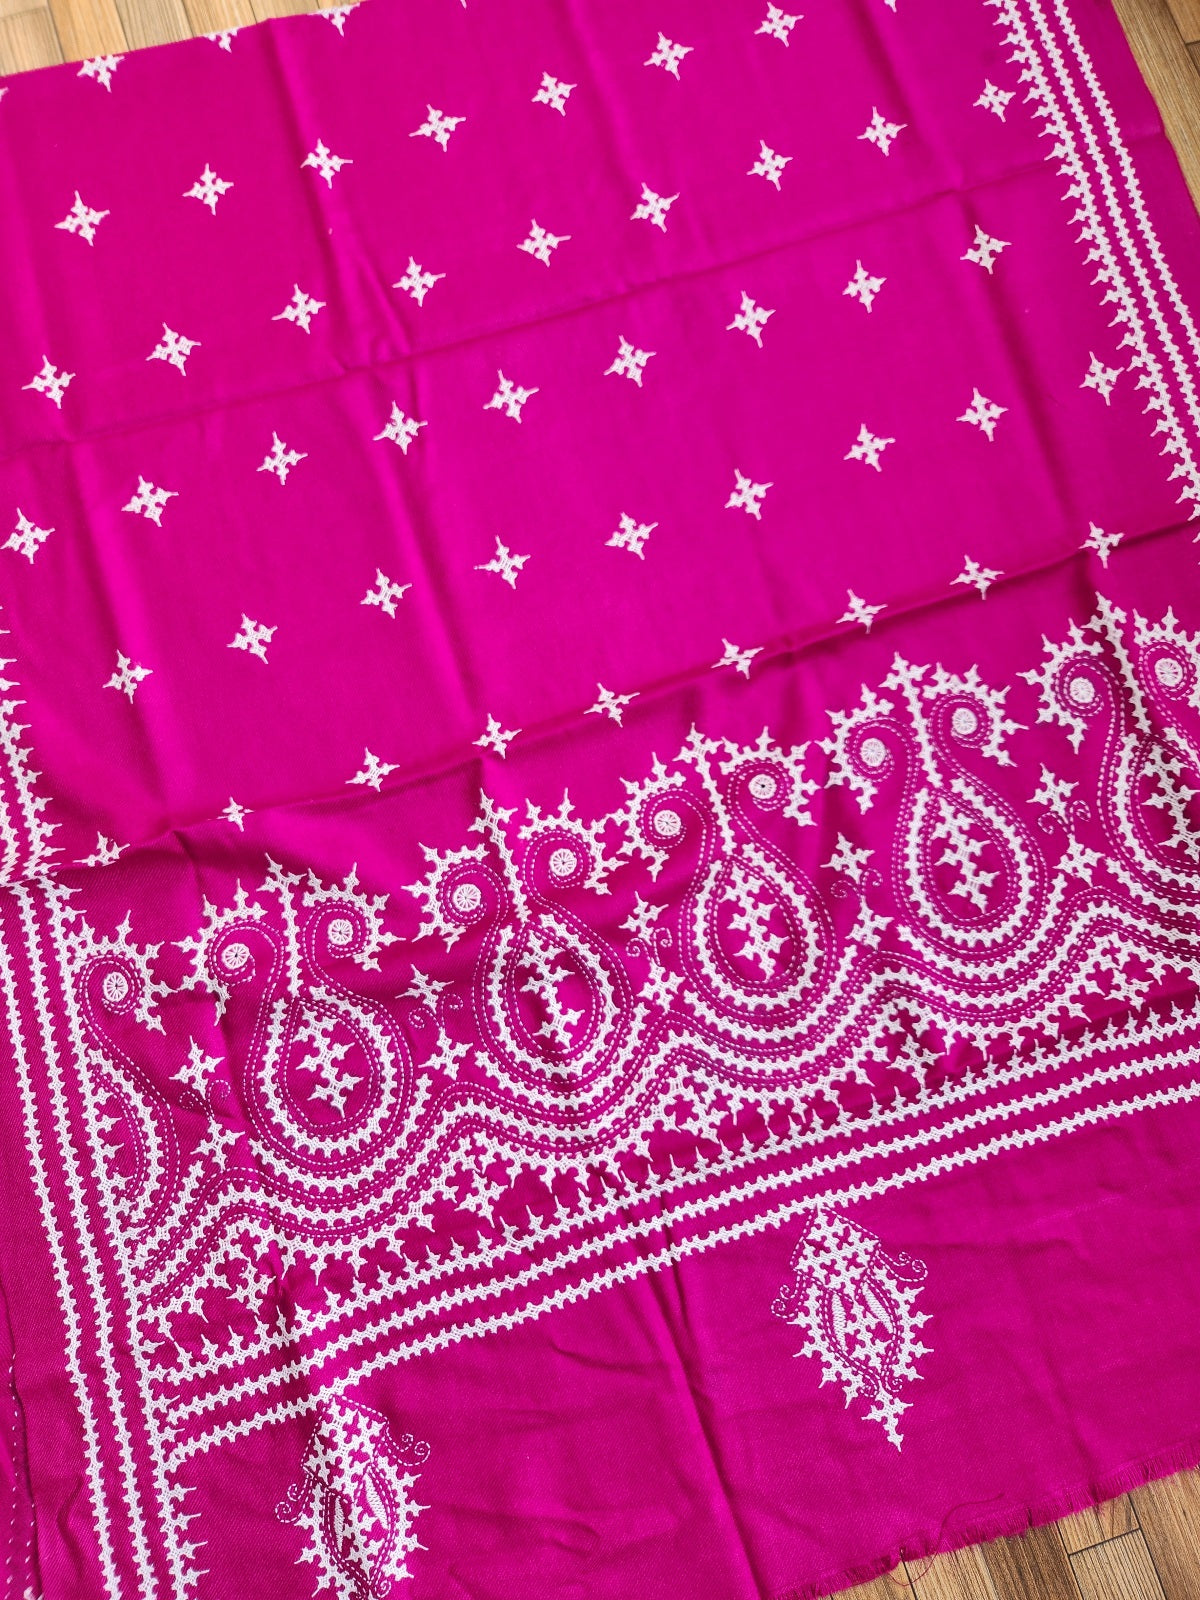 kutchwork woolen shawls handmade gifts Indian gifts handembroidery winterwear Pink wedding shopping